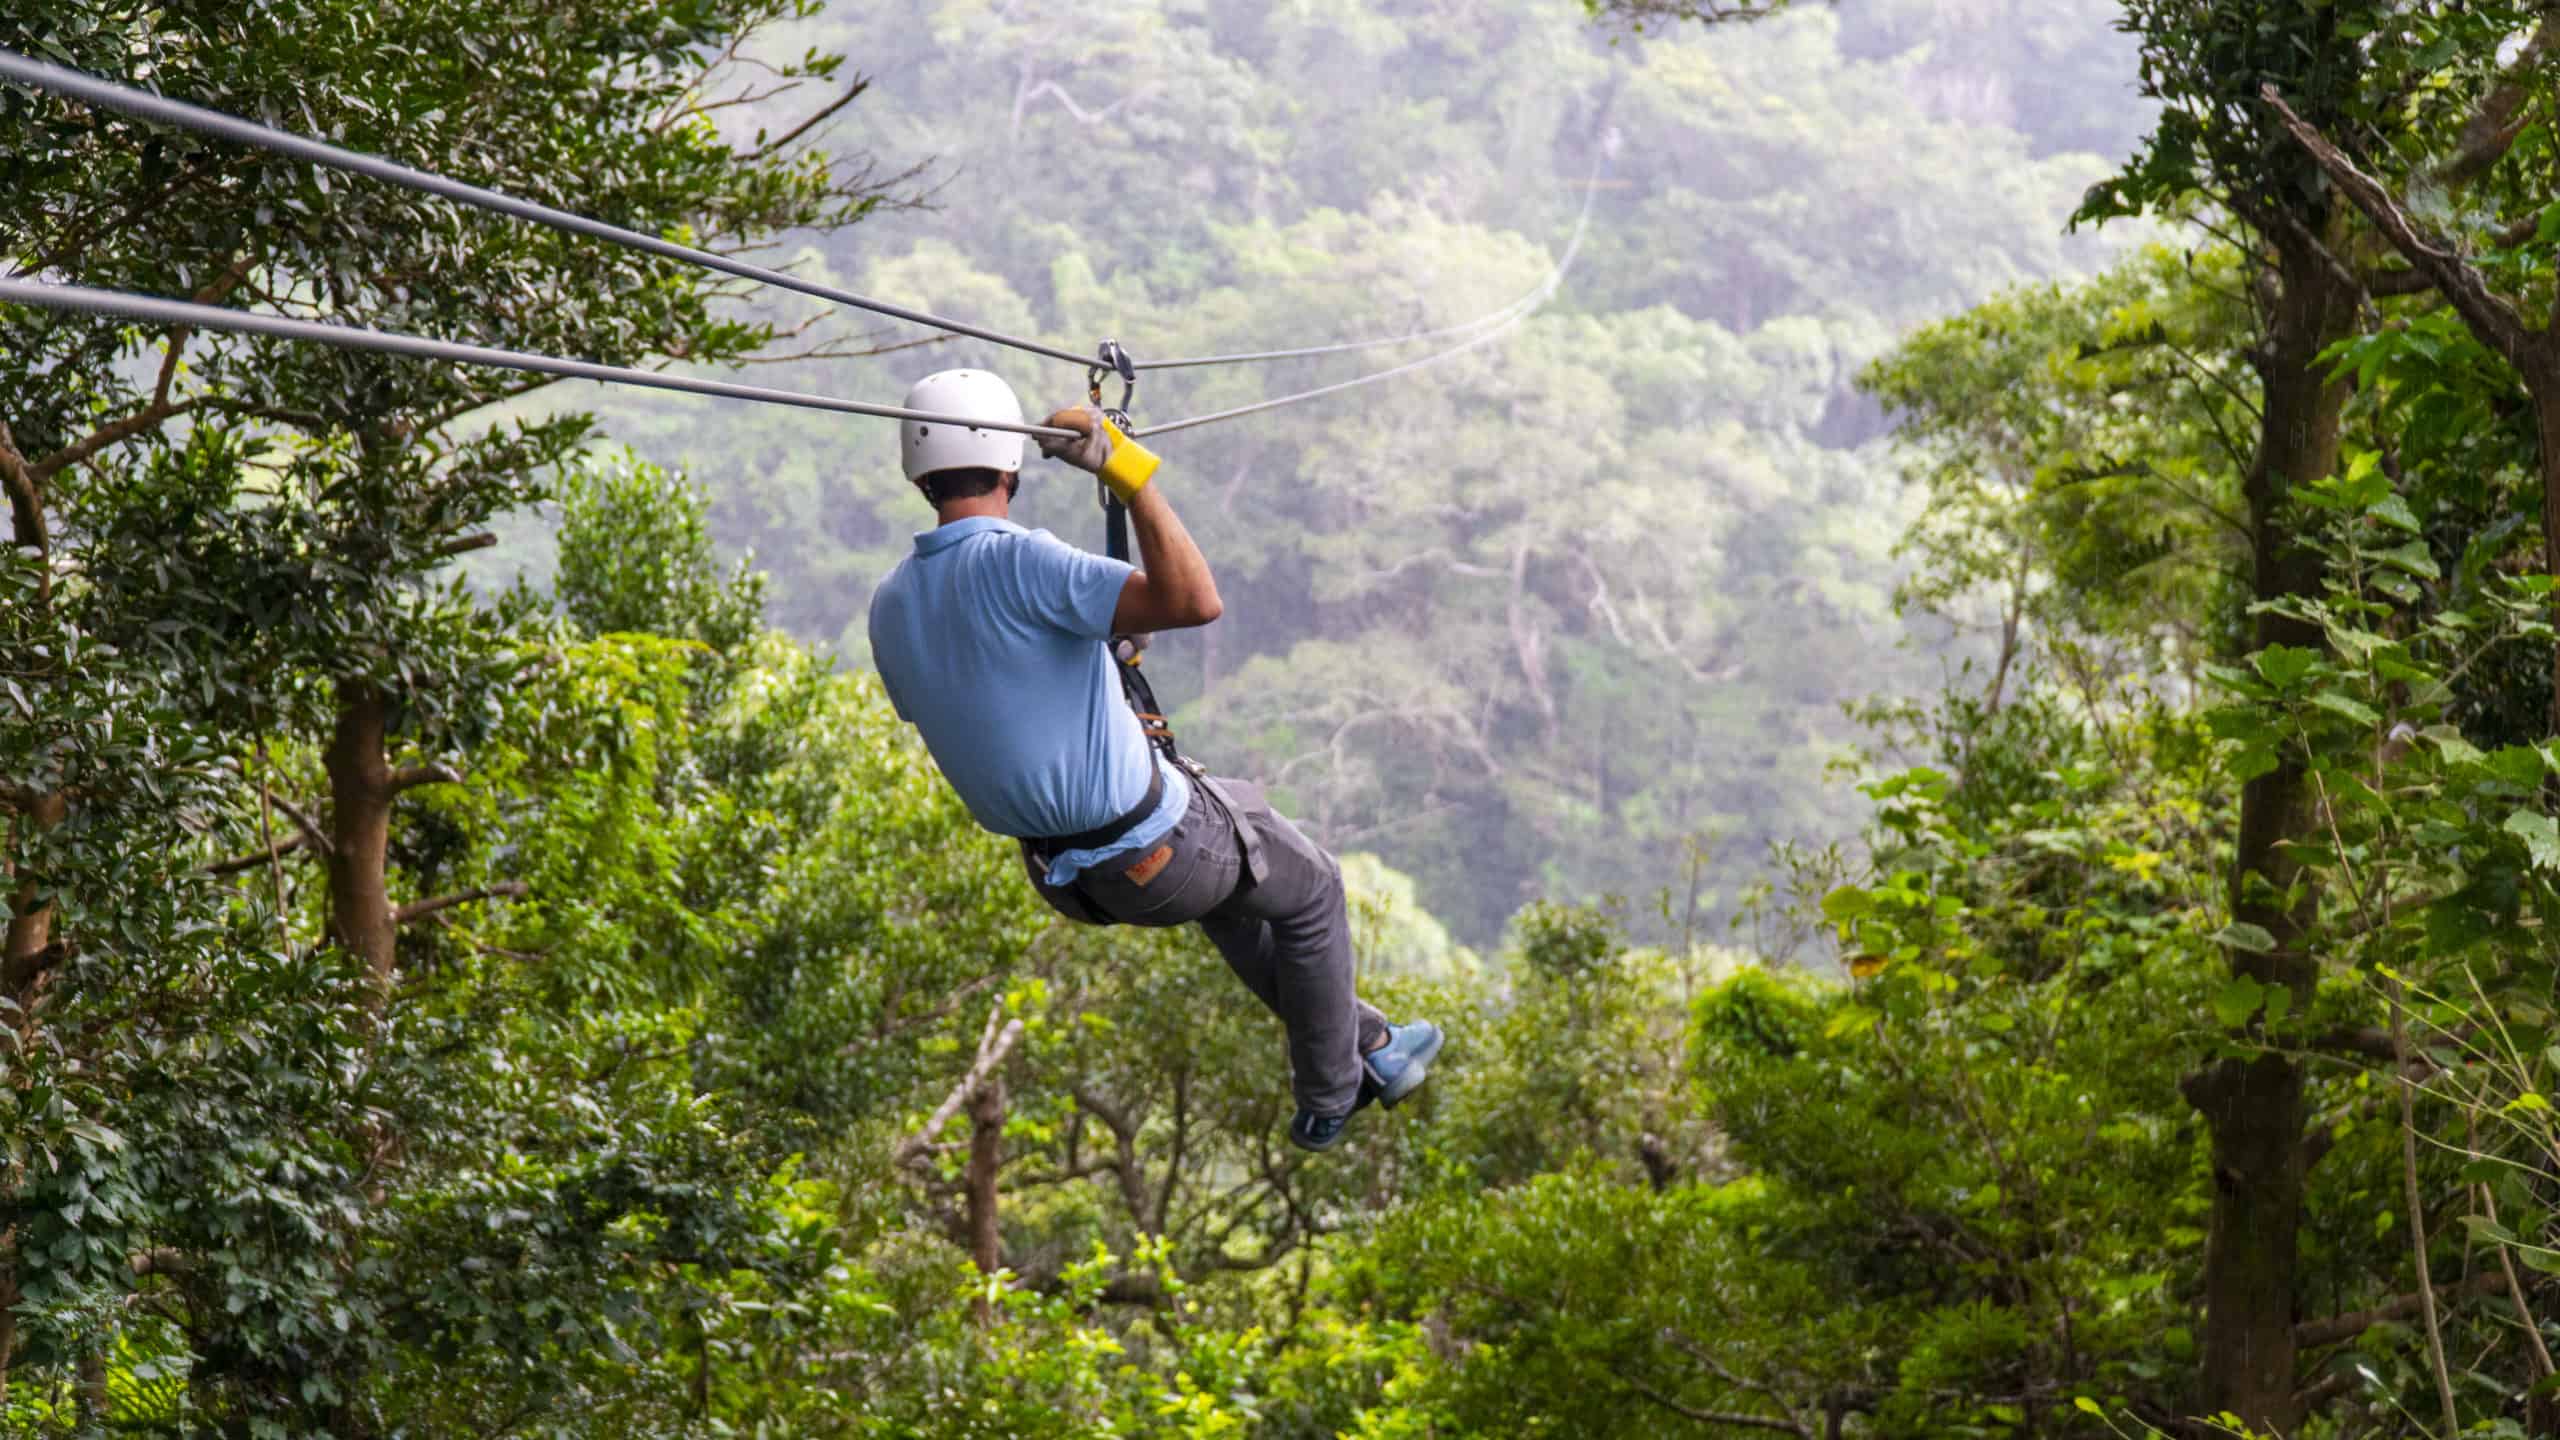 Zipline Canopy Tours in Costa Rica - Jaco Tour Desk